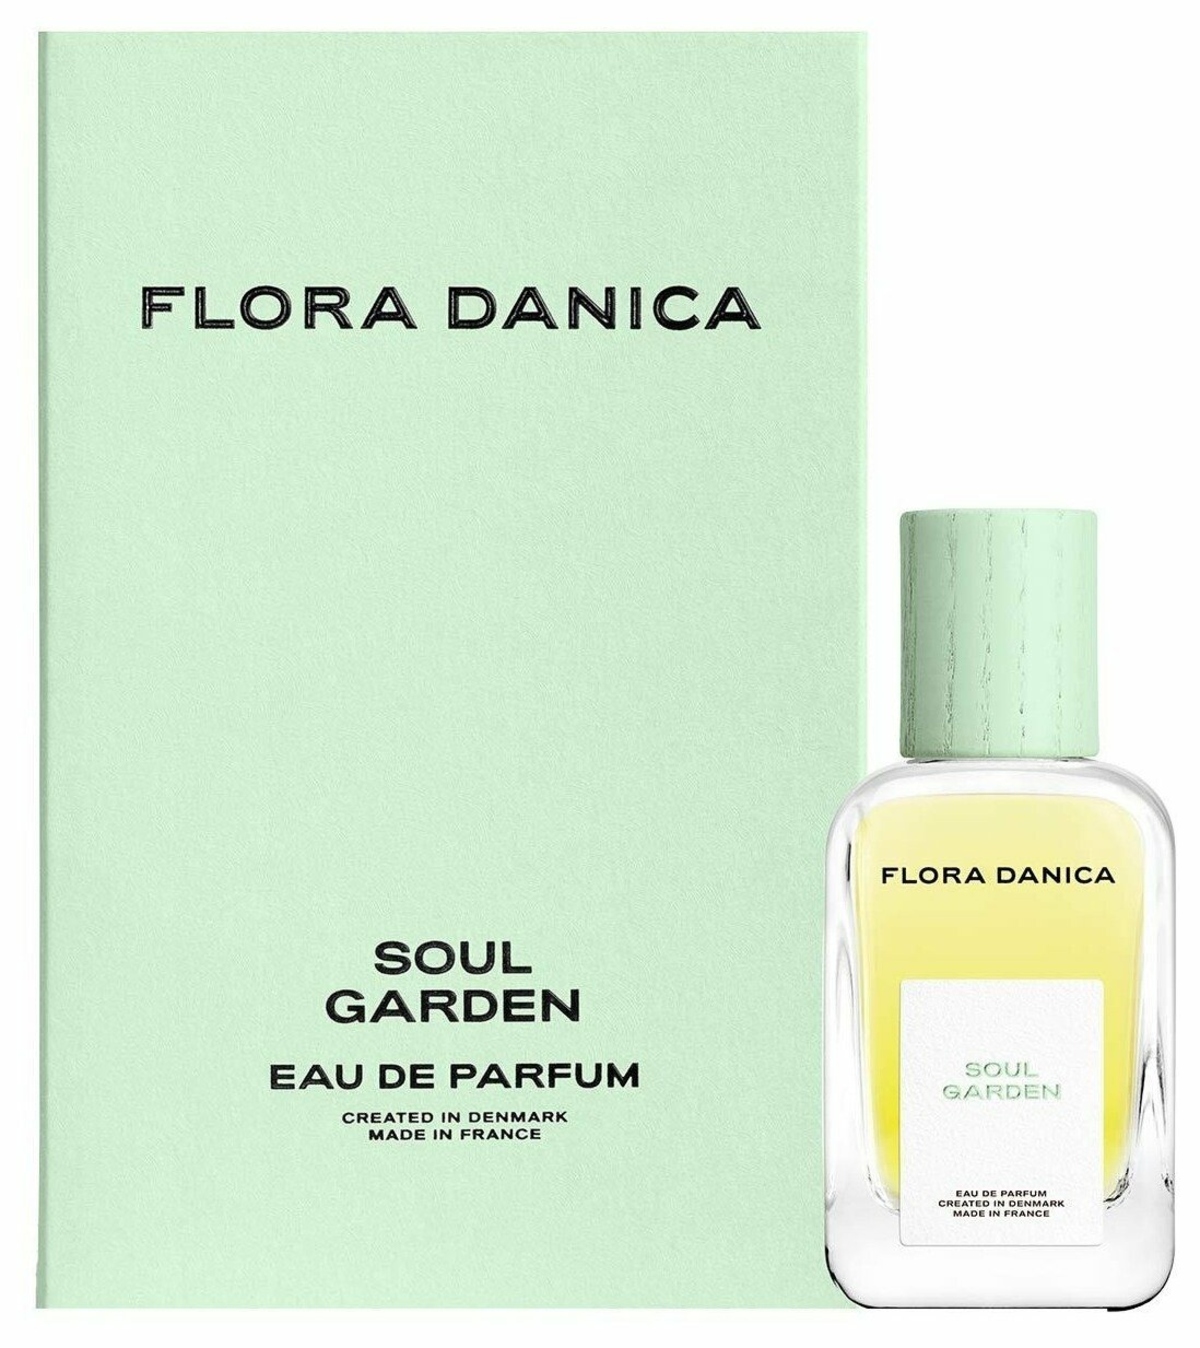 Soul Garden - Flora Danica